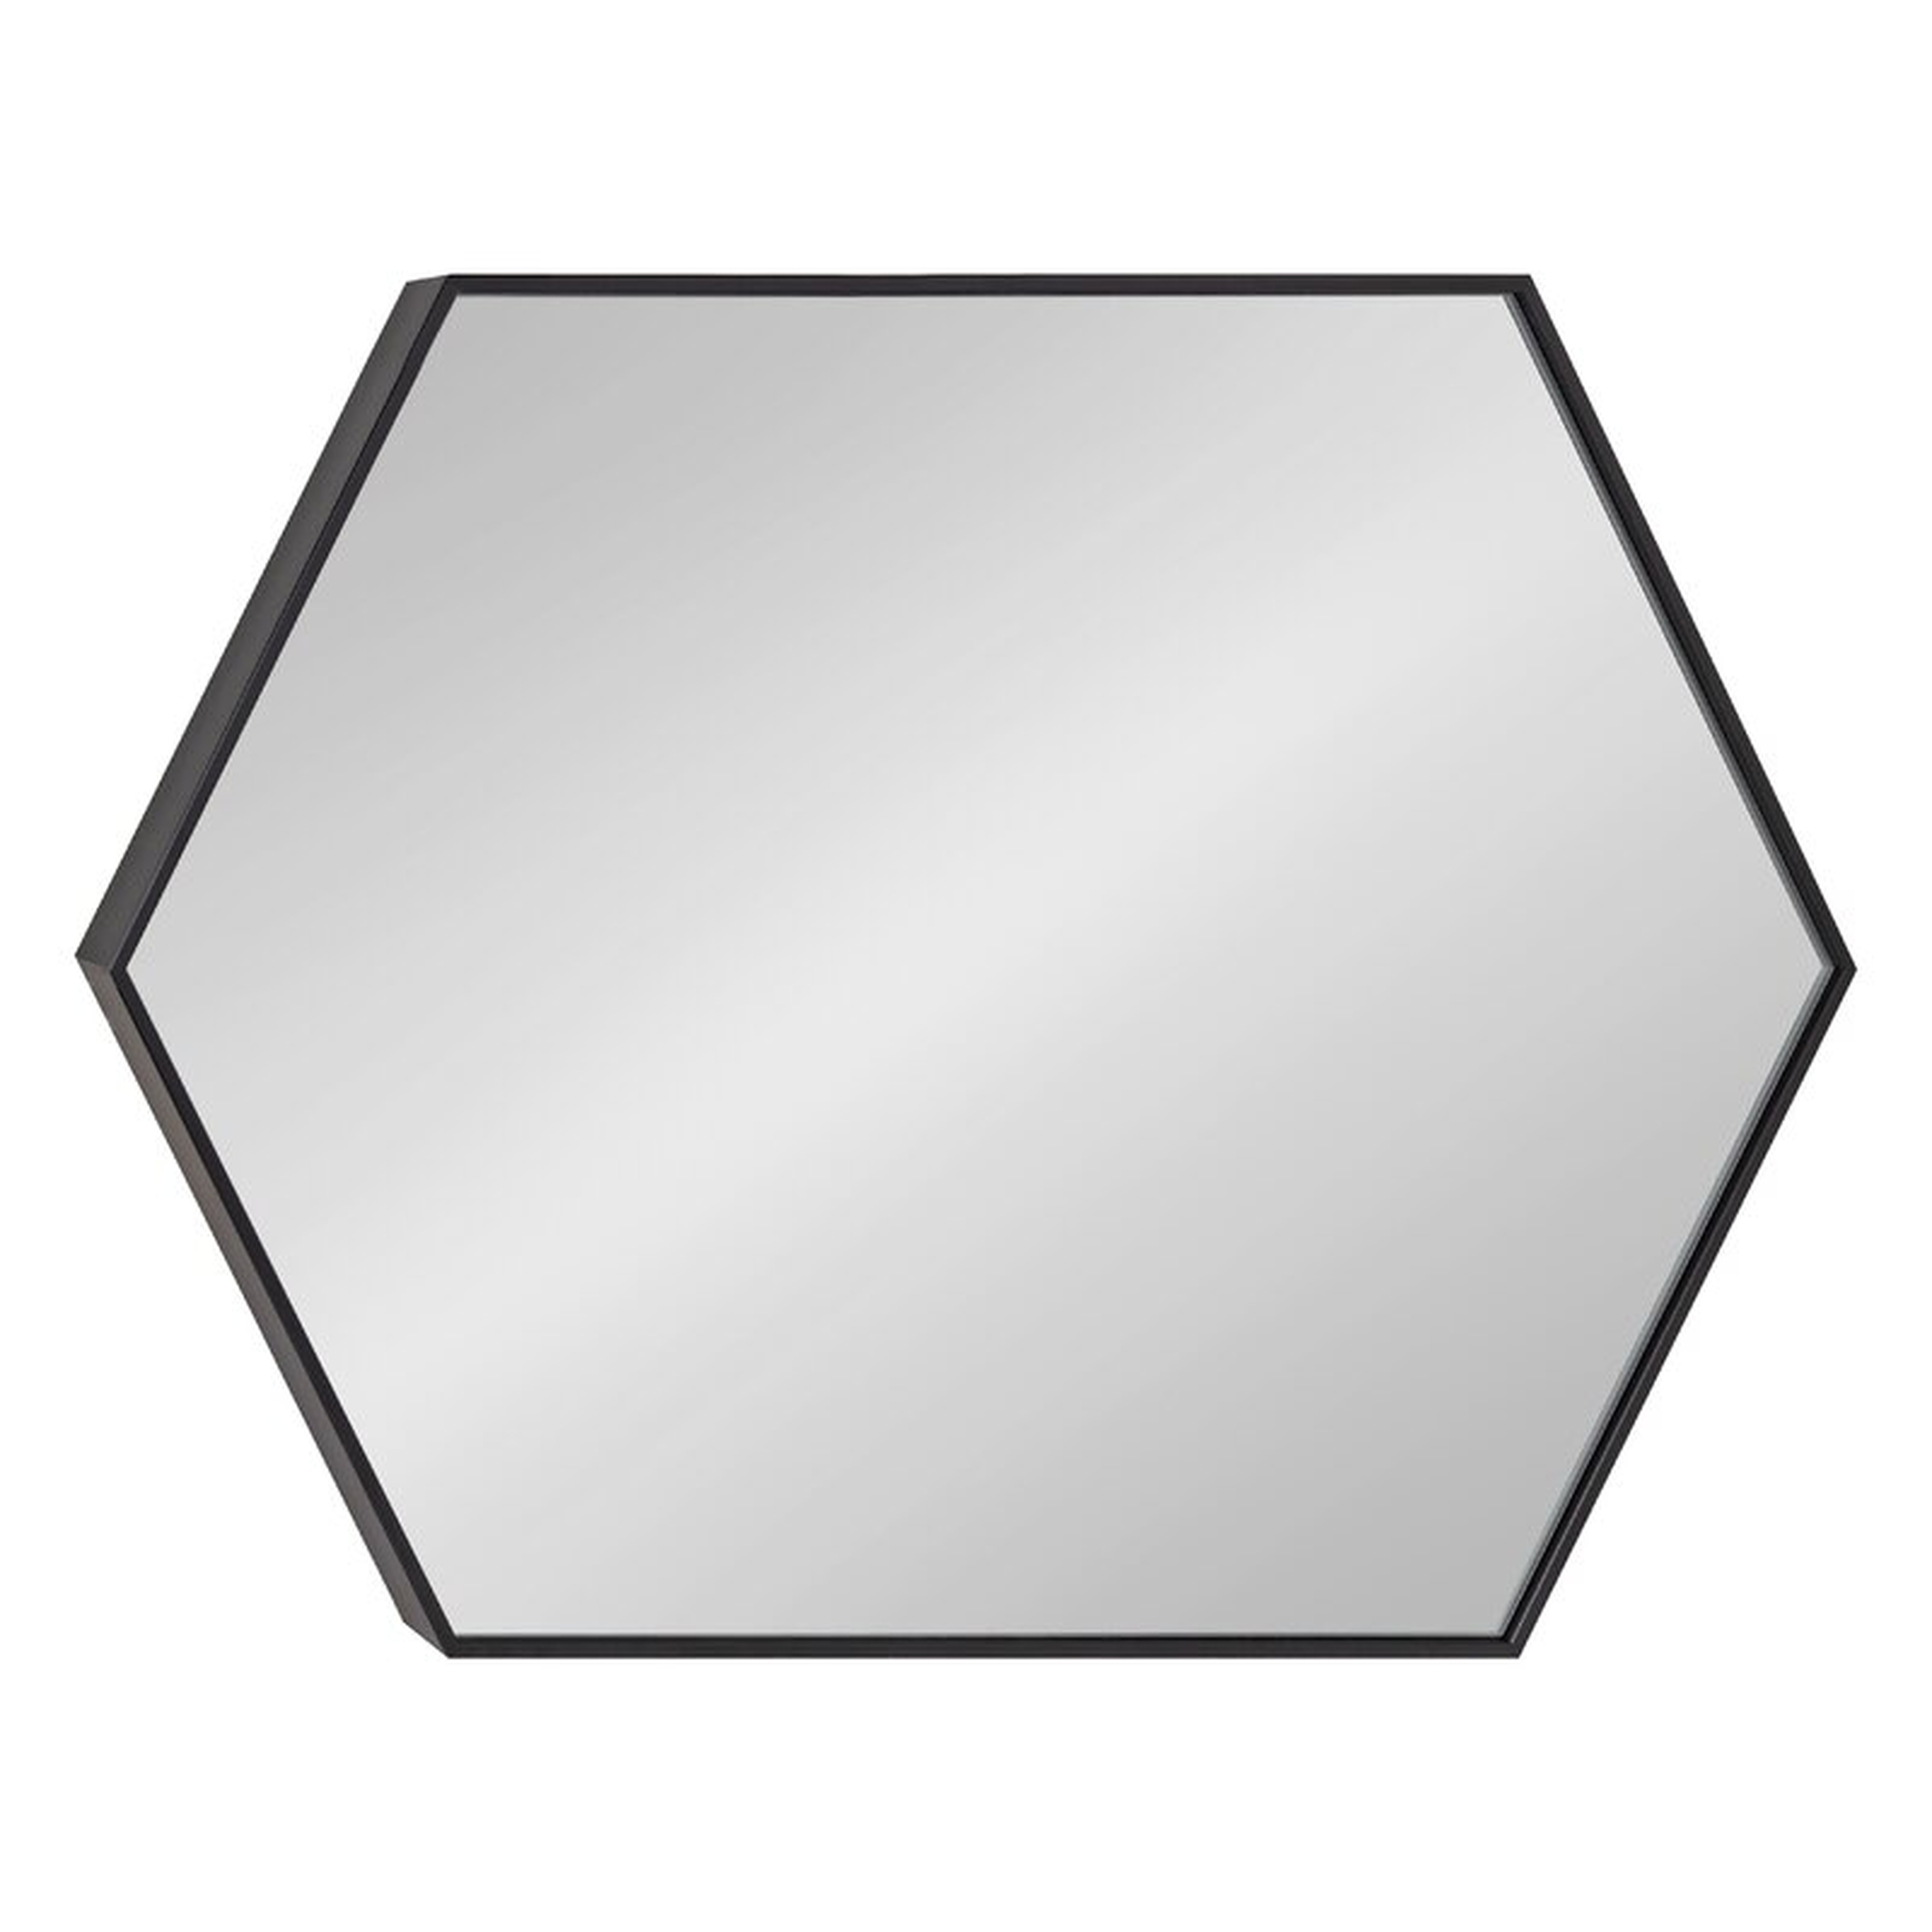 Zaliki Mid Century Hexagon Beveled Accent Mirror - Black - 36.75" x 24.75" - Wayfair